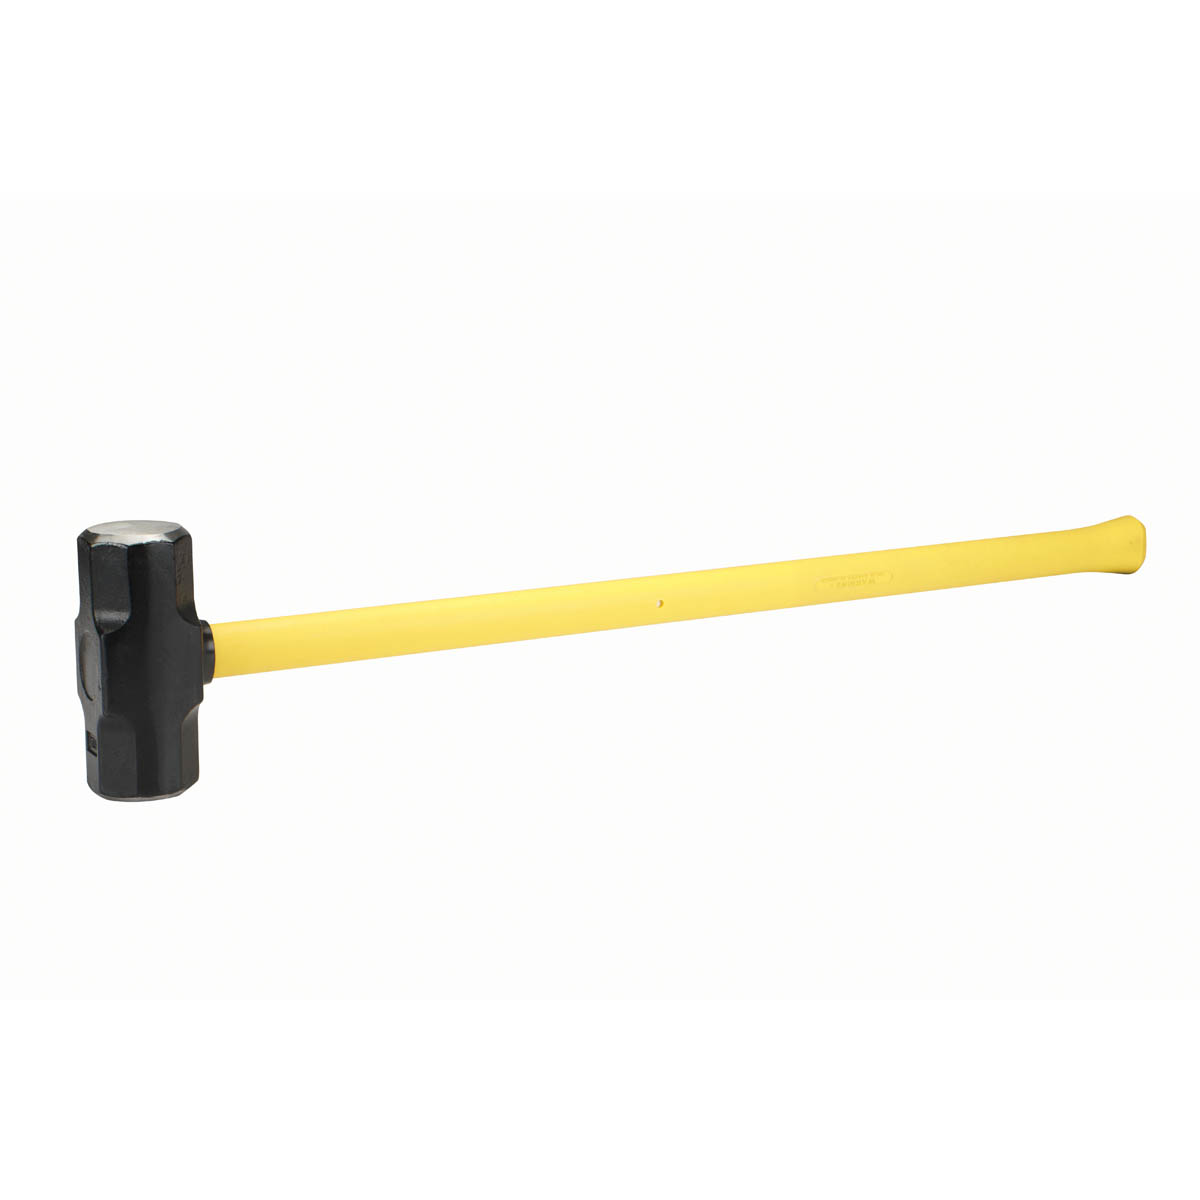 PITTSBURGH 10 lb. Fiberglass Sledge Hammer - Item 61327